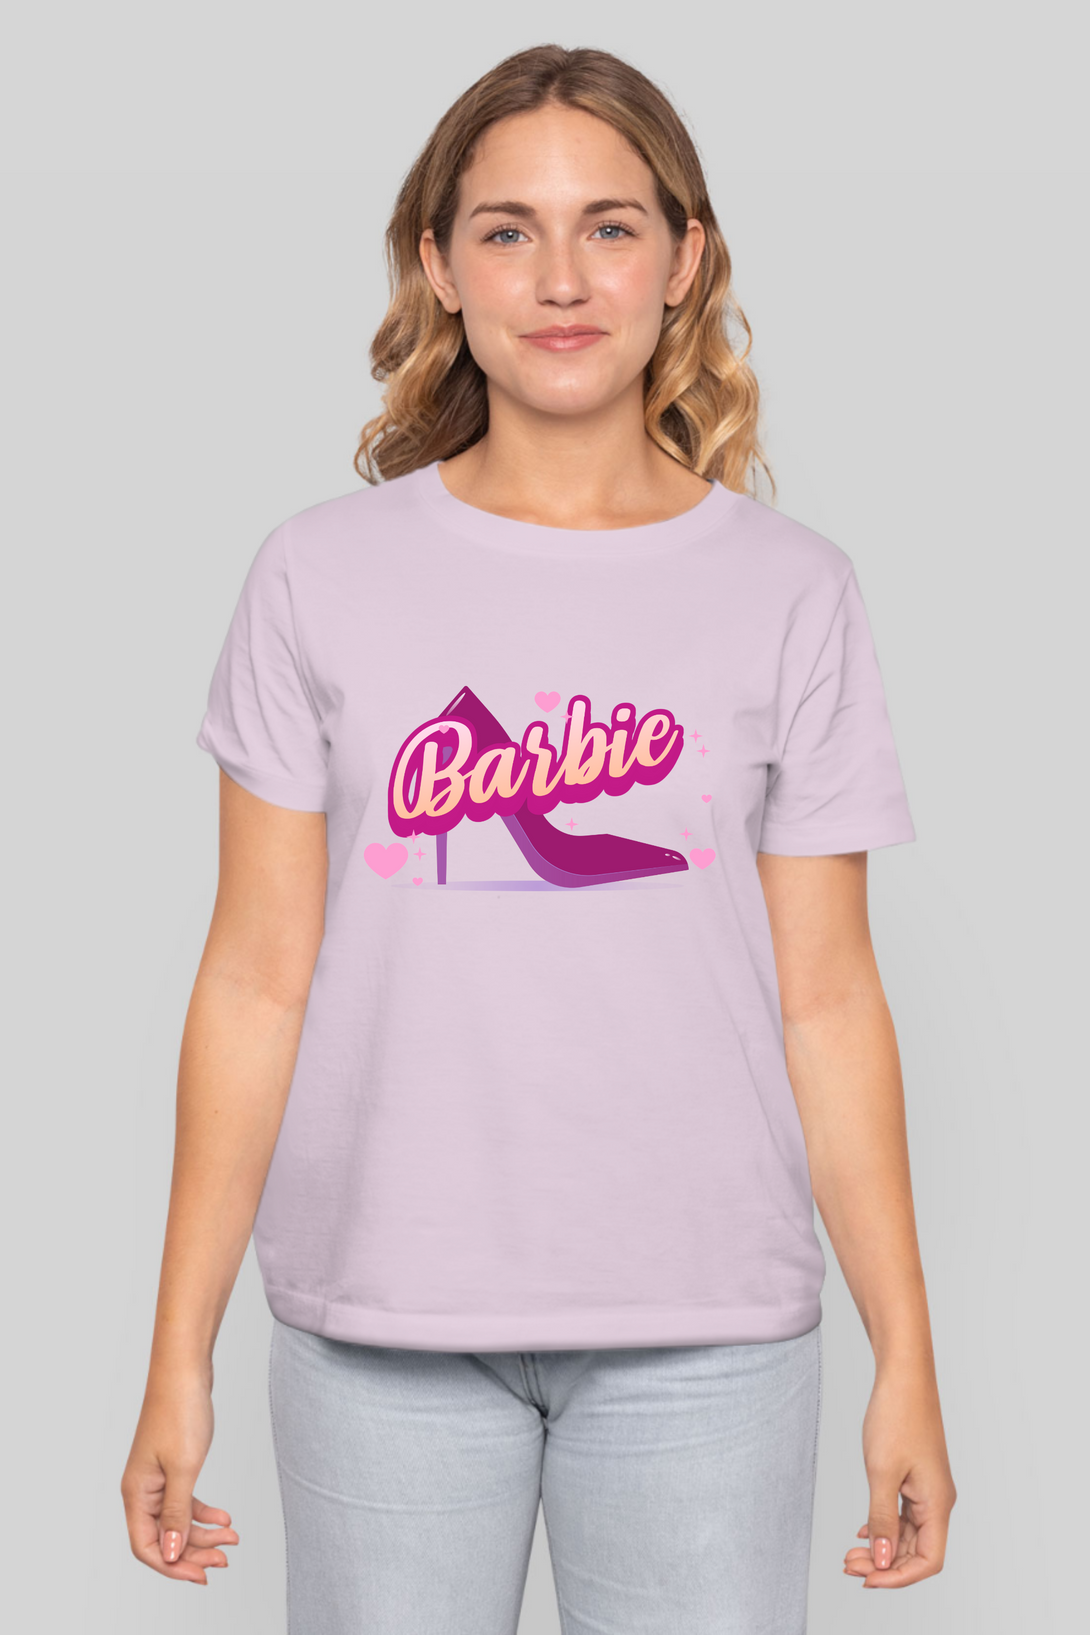 Barbie Sandal Printed T-Shirt For Women - WowWaves - 8